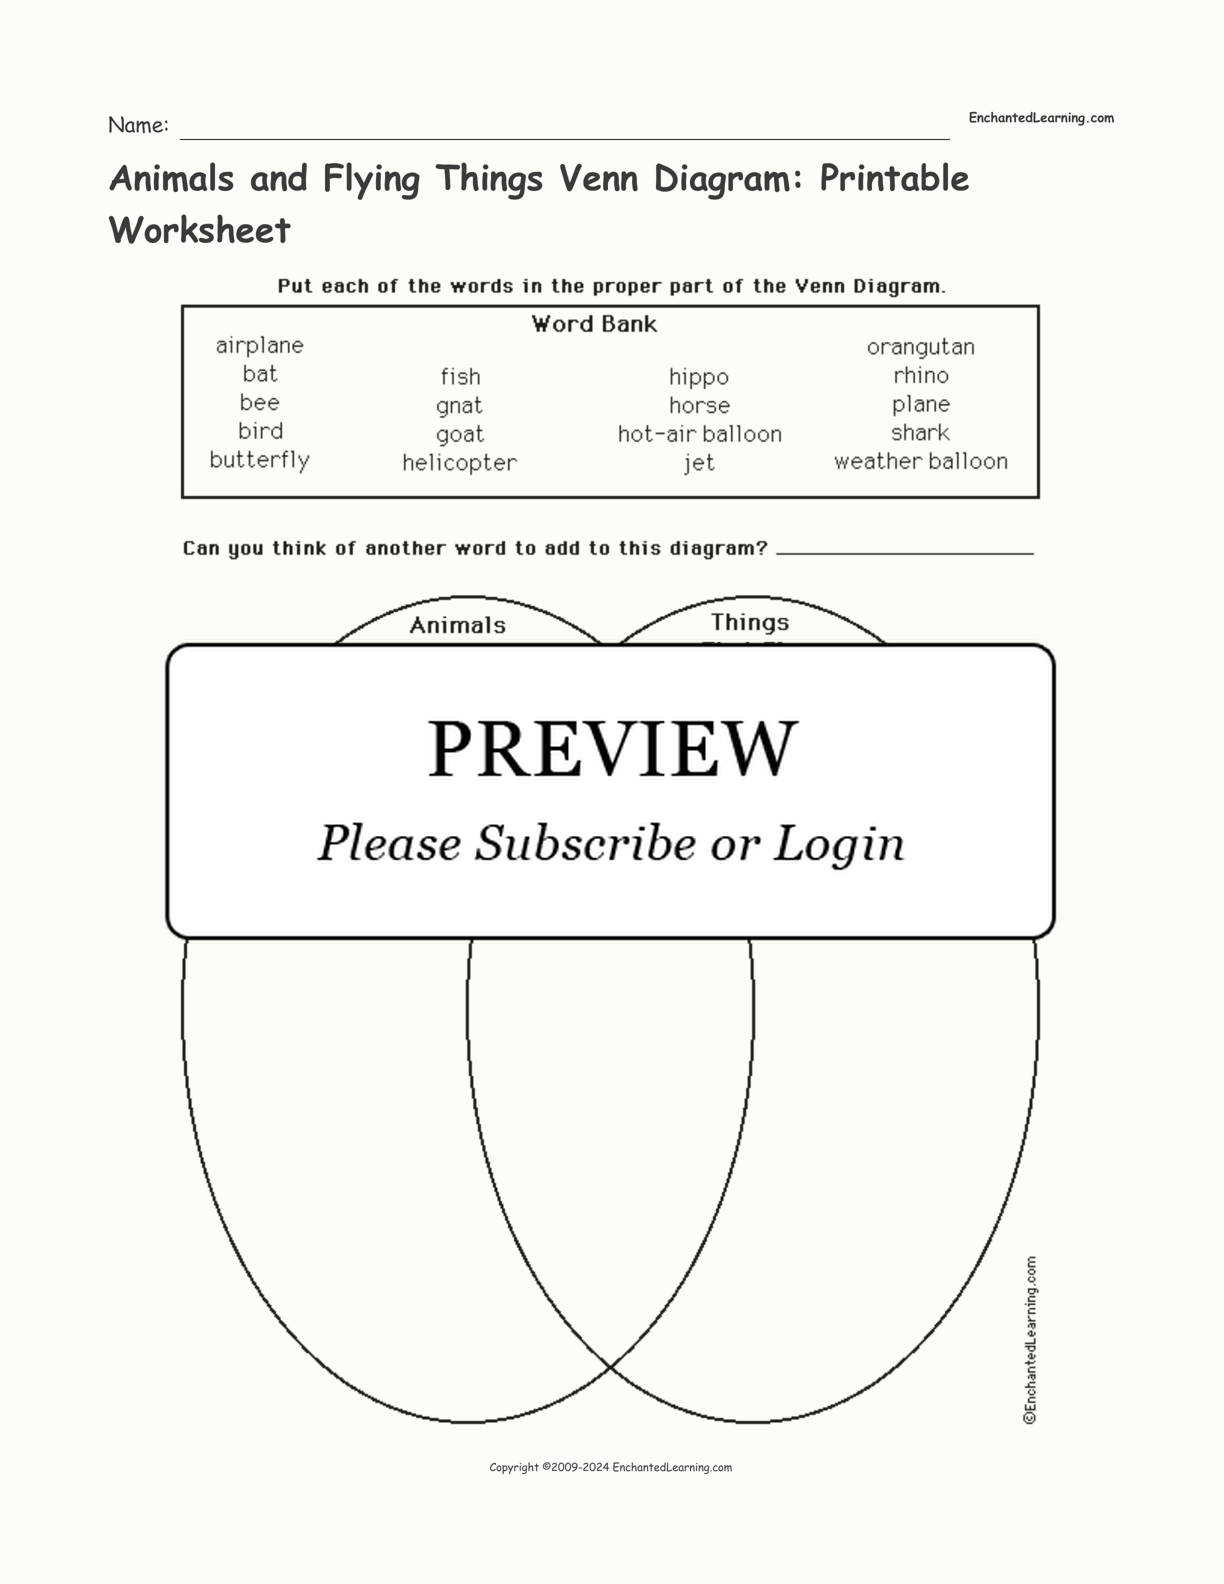 Animals and Flying Things Venn Diagram: Printable Worksheet interactive worksheet page 1